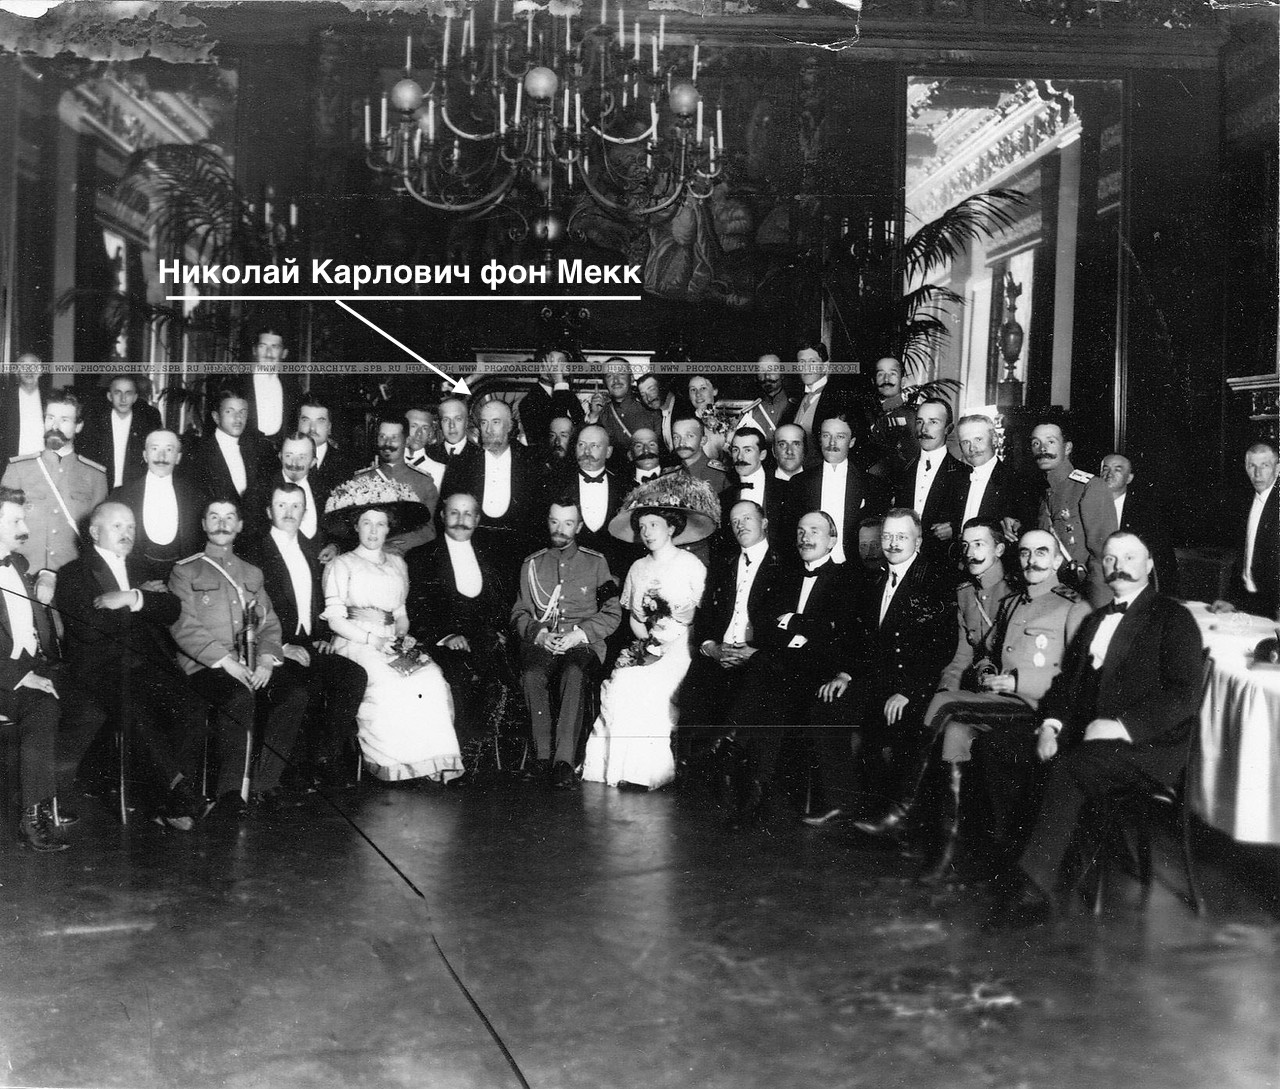 Николаи Карлович фон Мекк и Участники банкета в честь победителеи пробега в ресторане